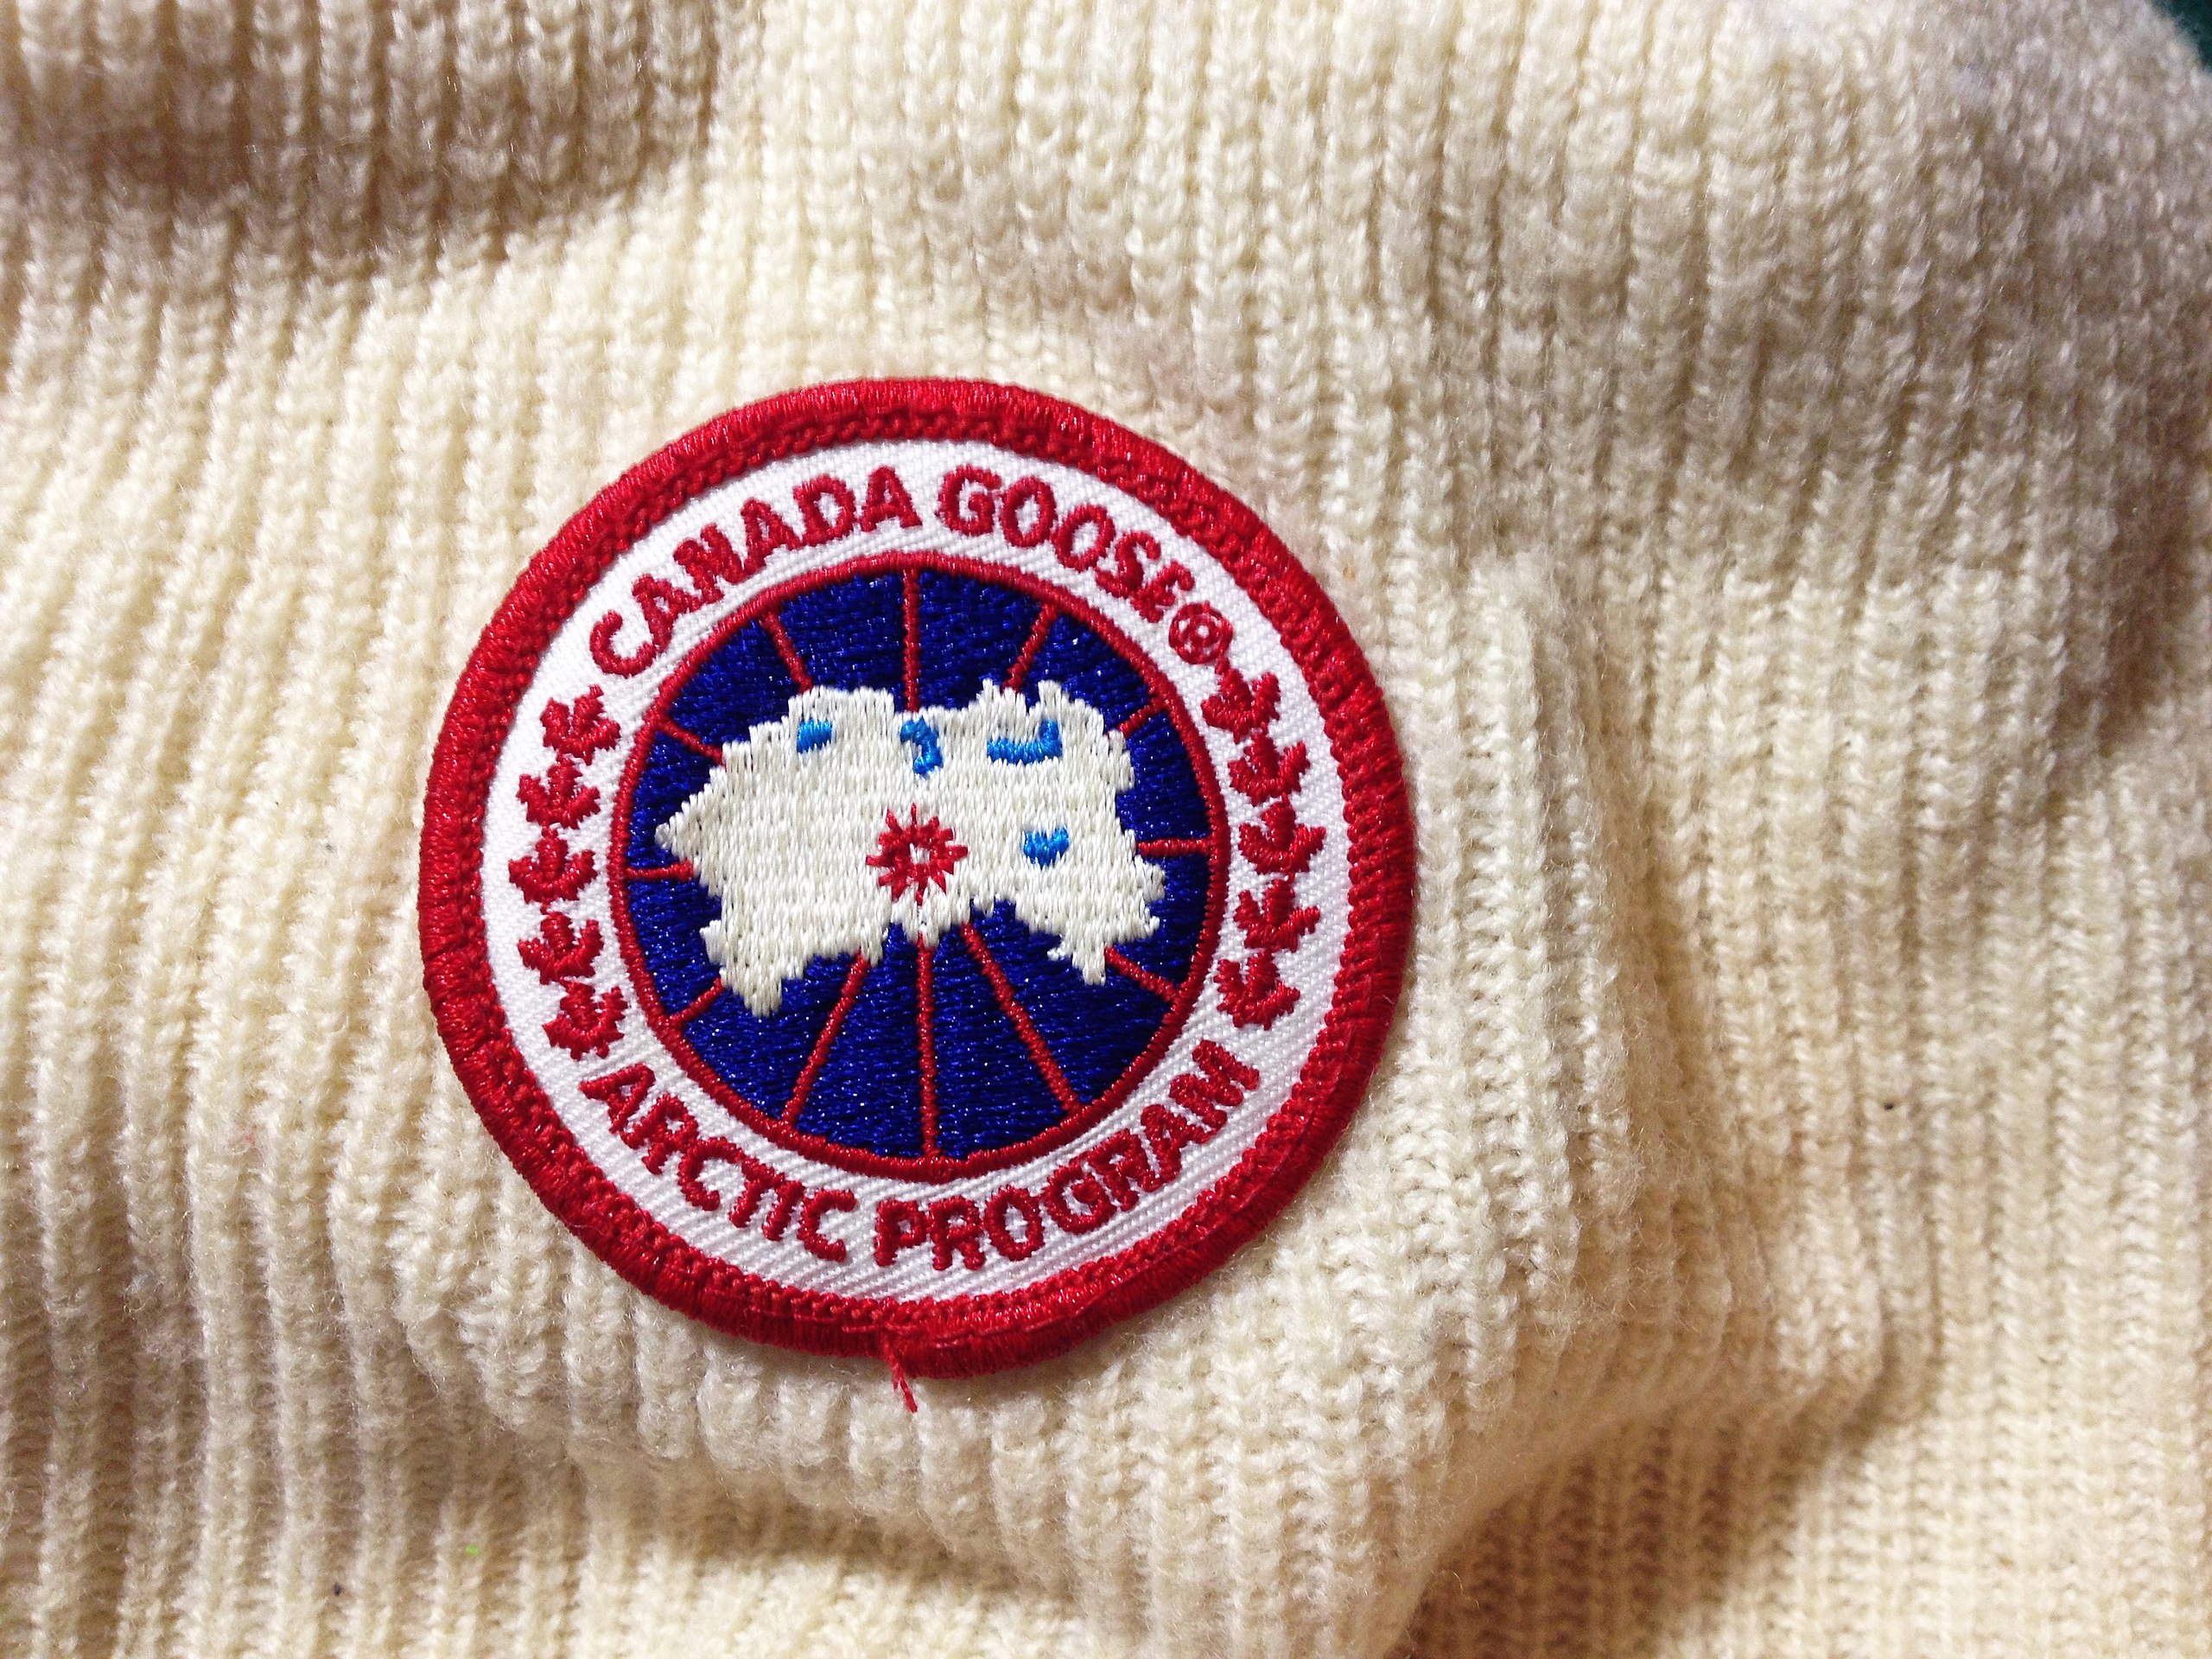 File:Canada Goose logo label.jpg - Wikipedia